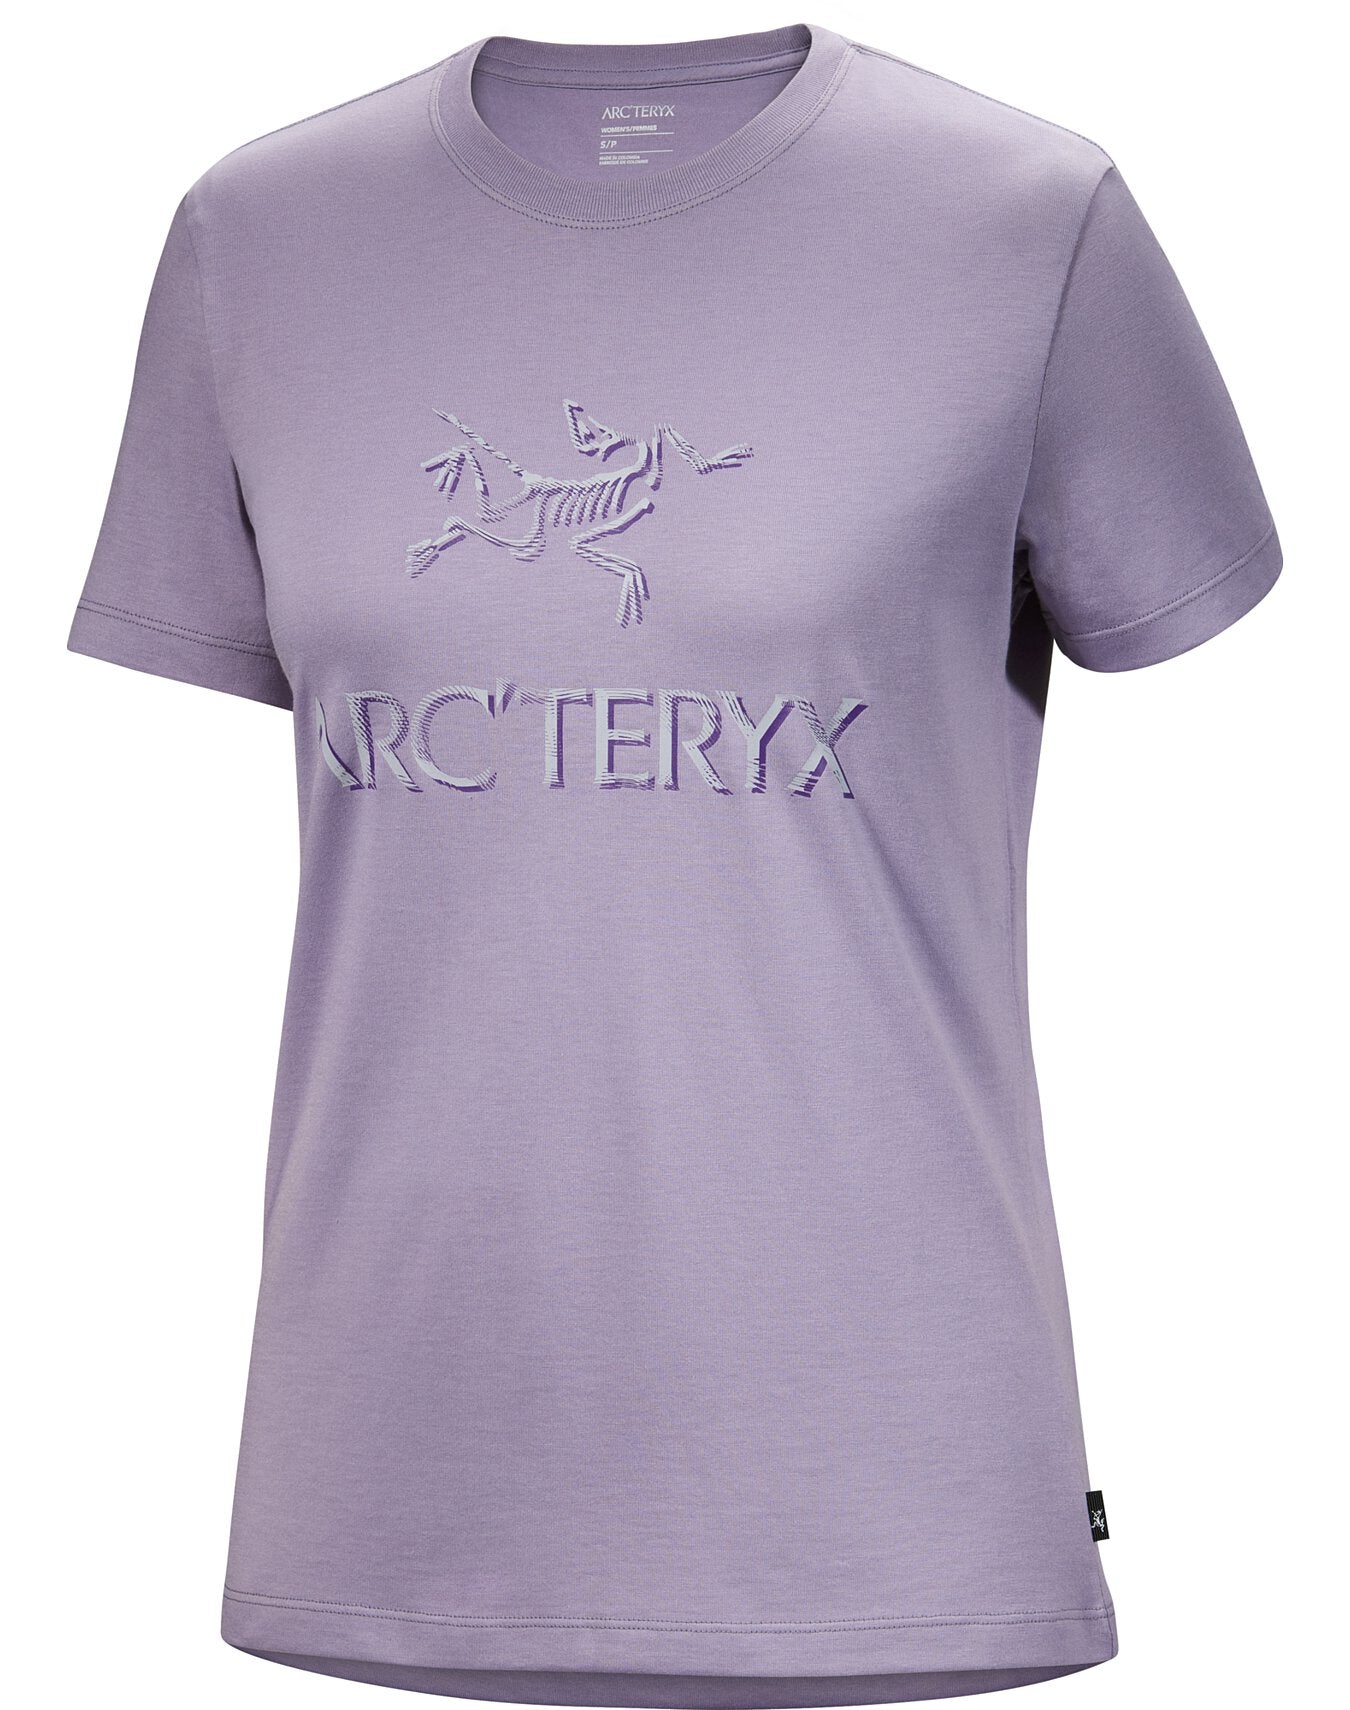 Arc-Word-Cotton-T-Shirt-W-Velocity.jpg